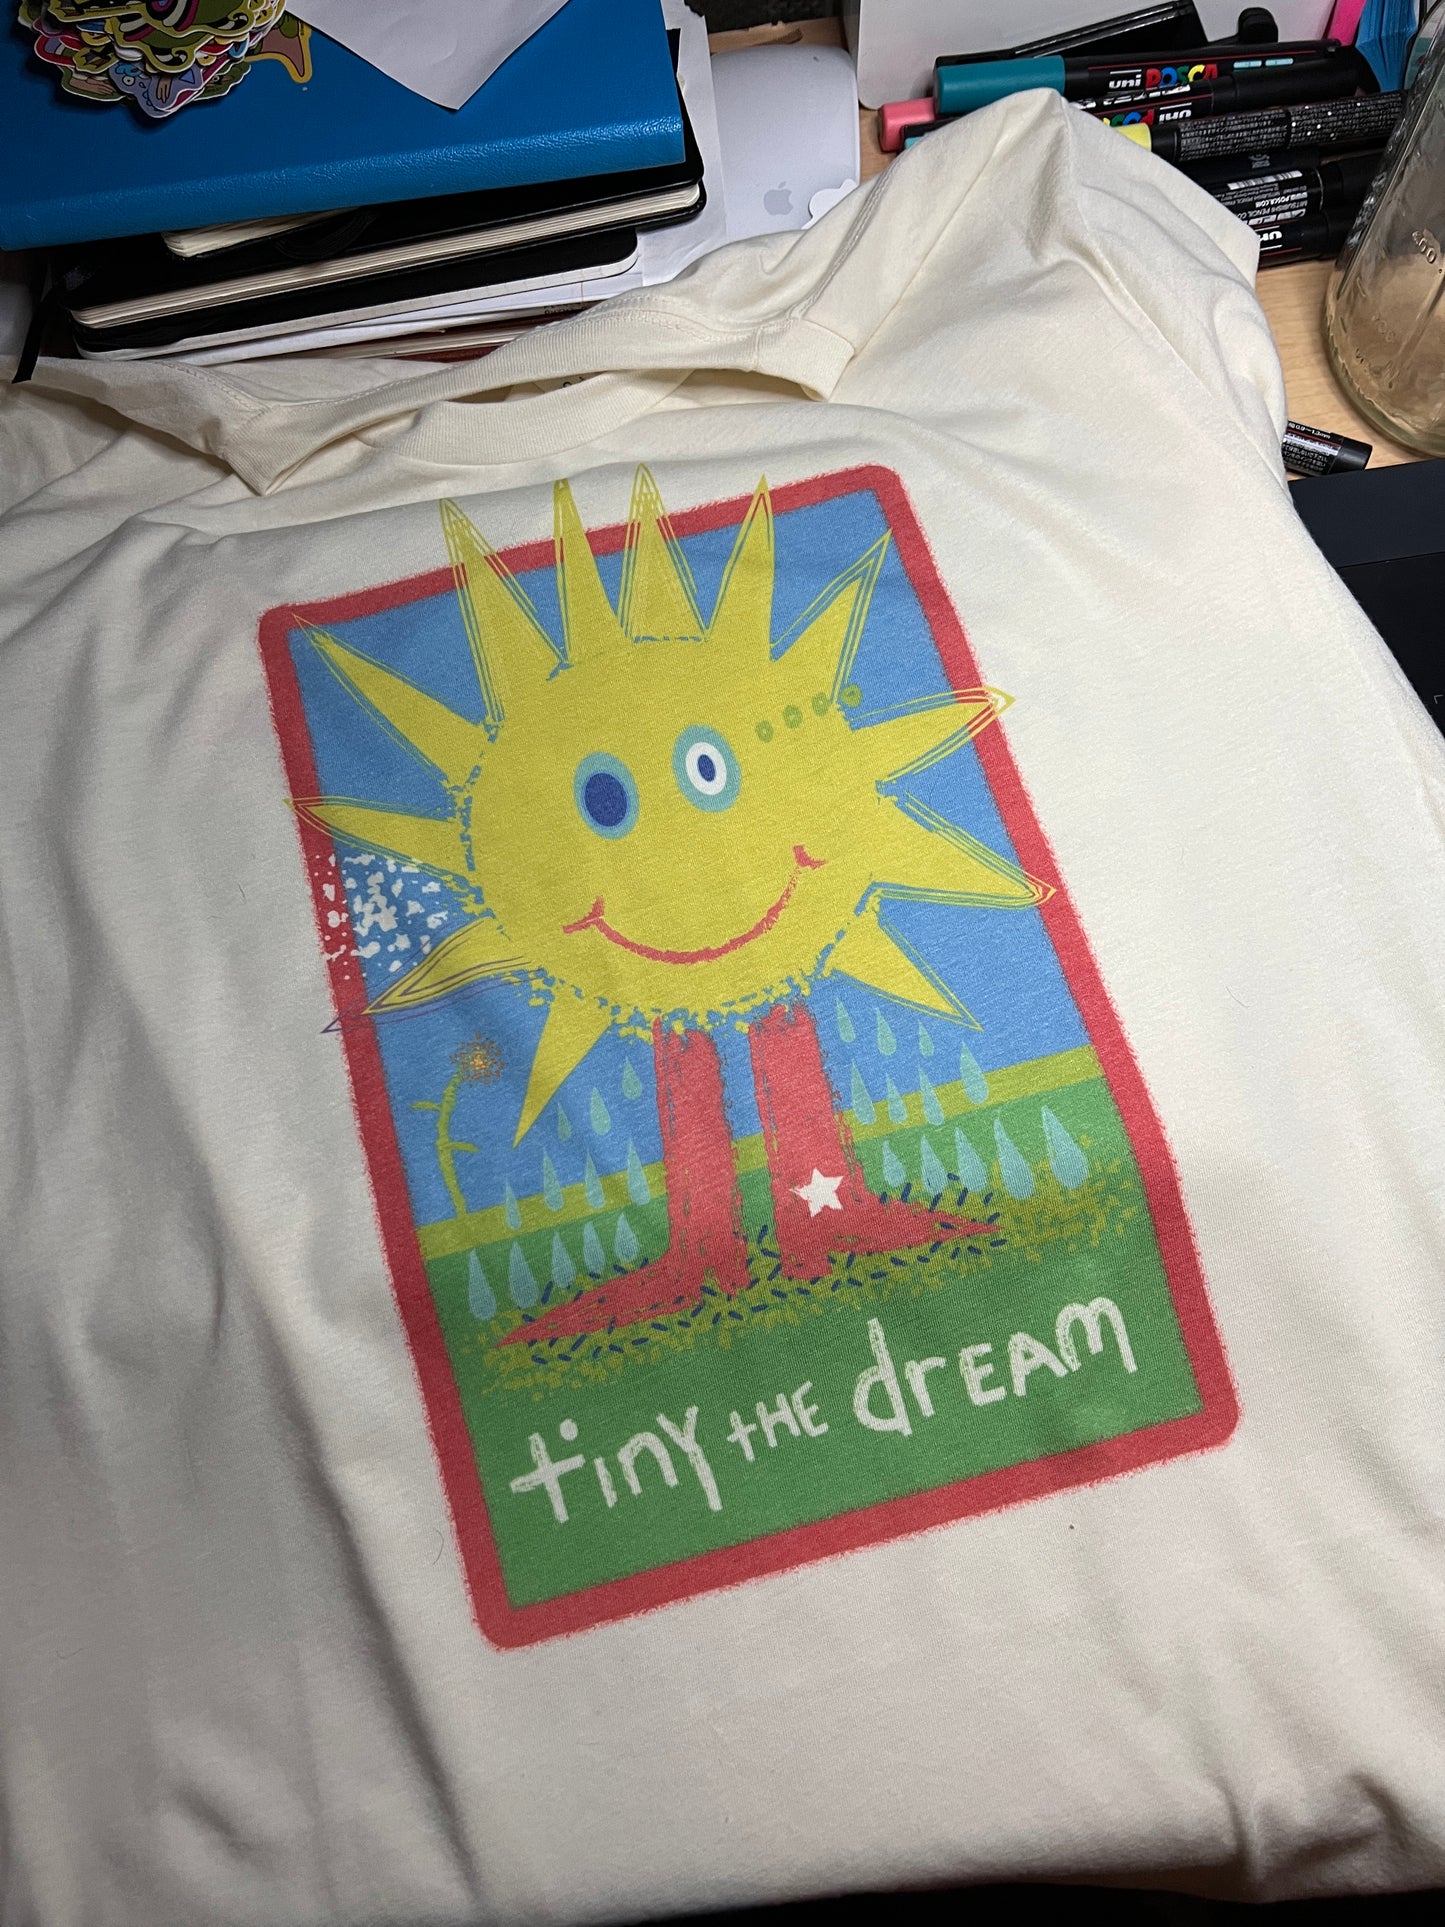 Tiny the Dream - Sunshine Shirt